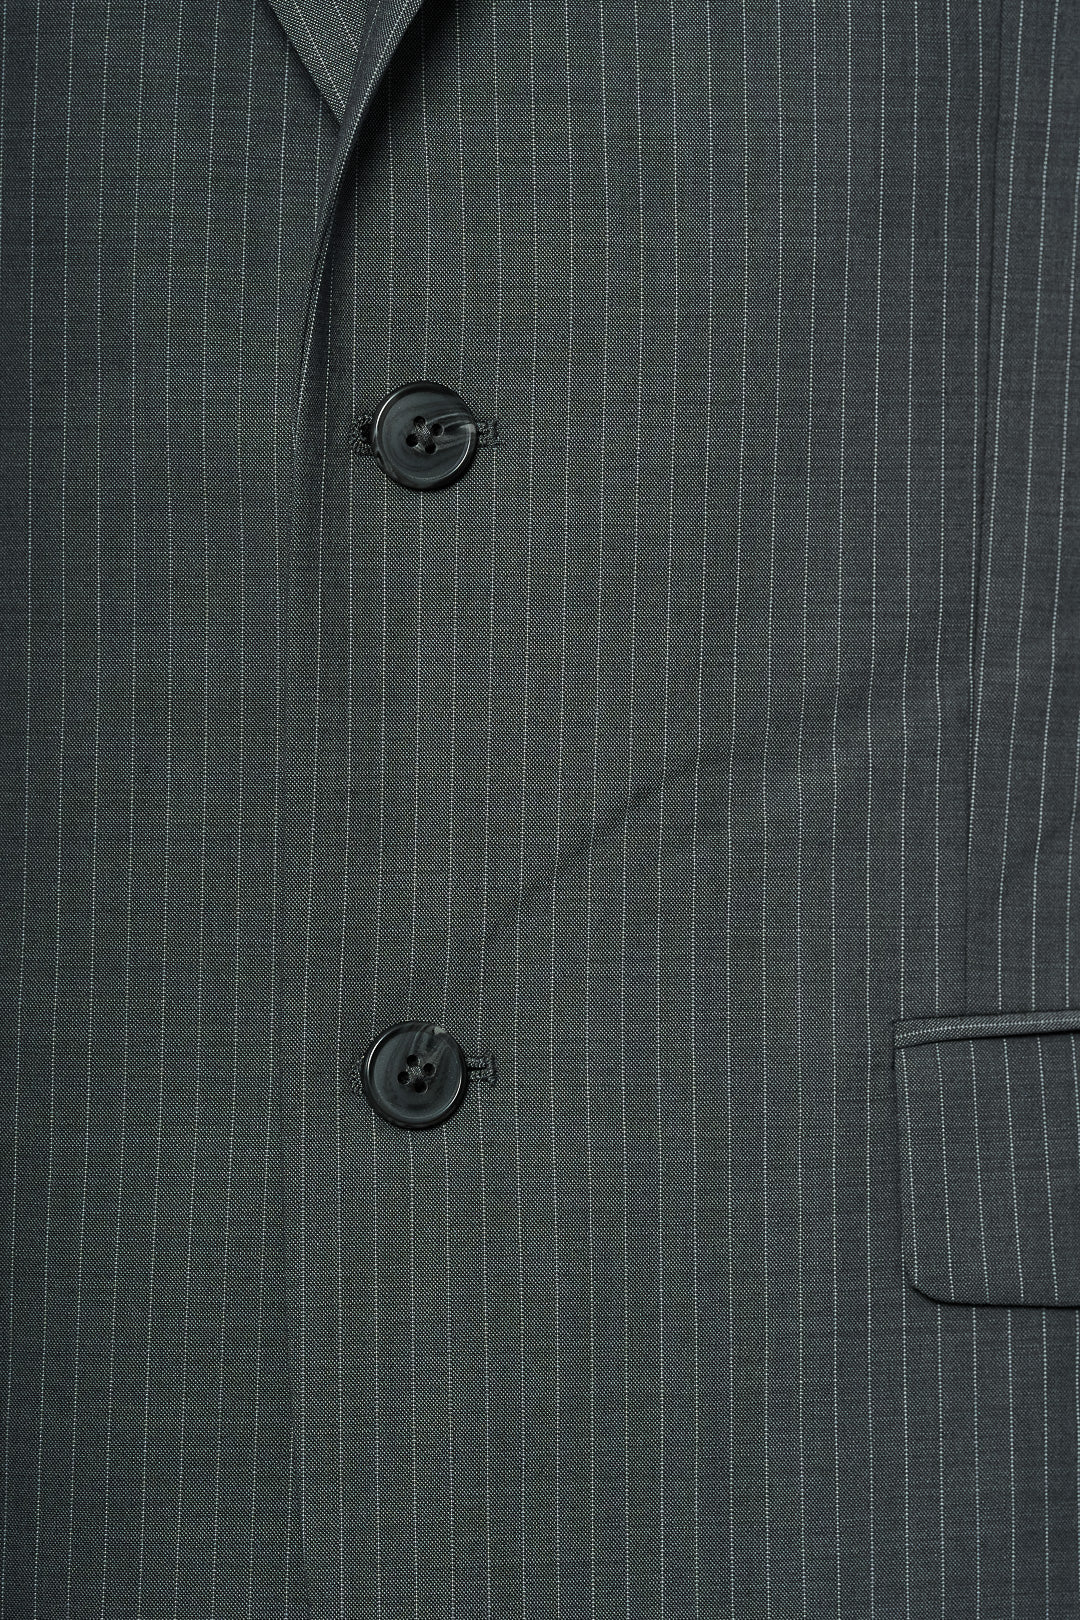 Pinstripe Gray Wool Suit